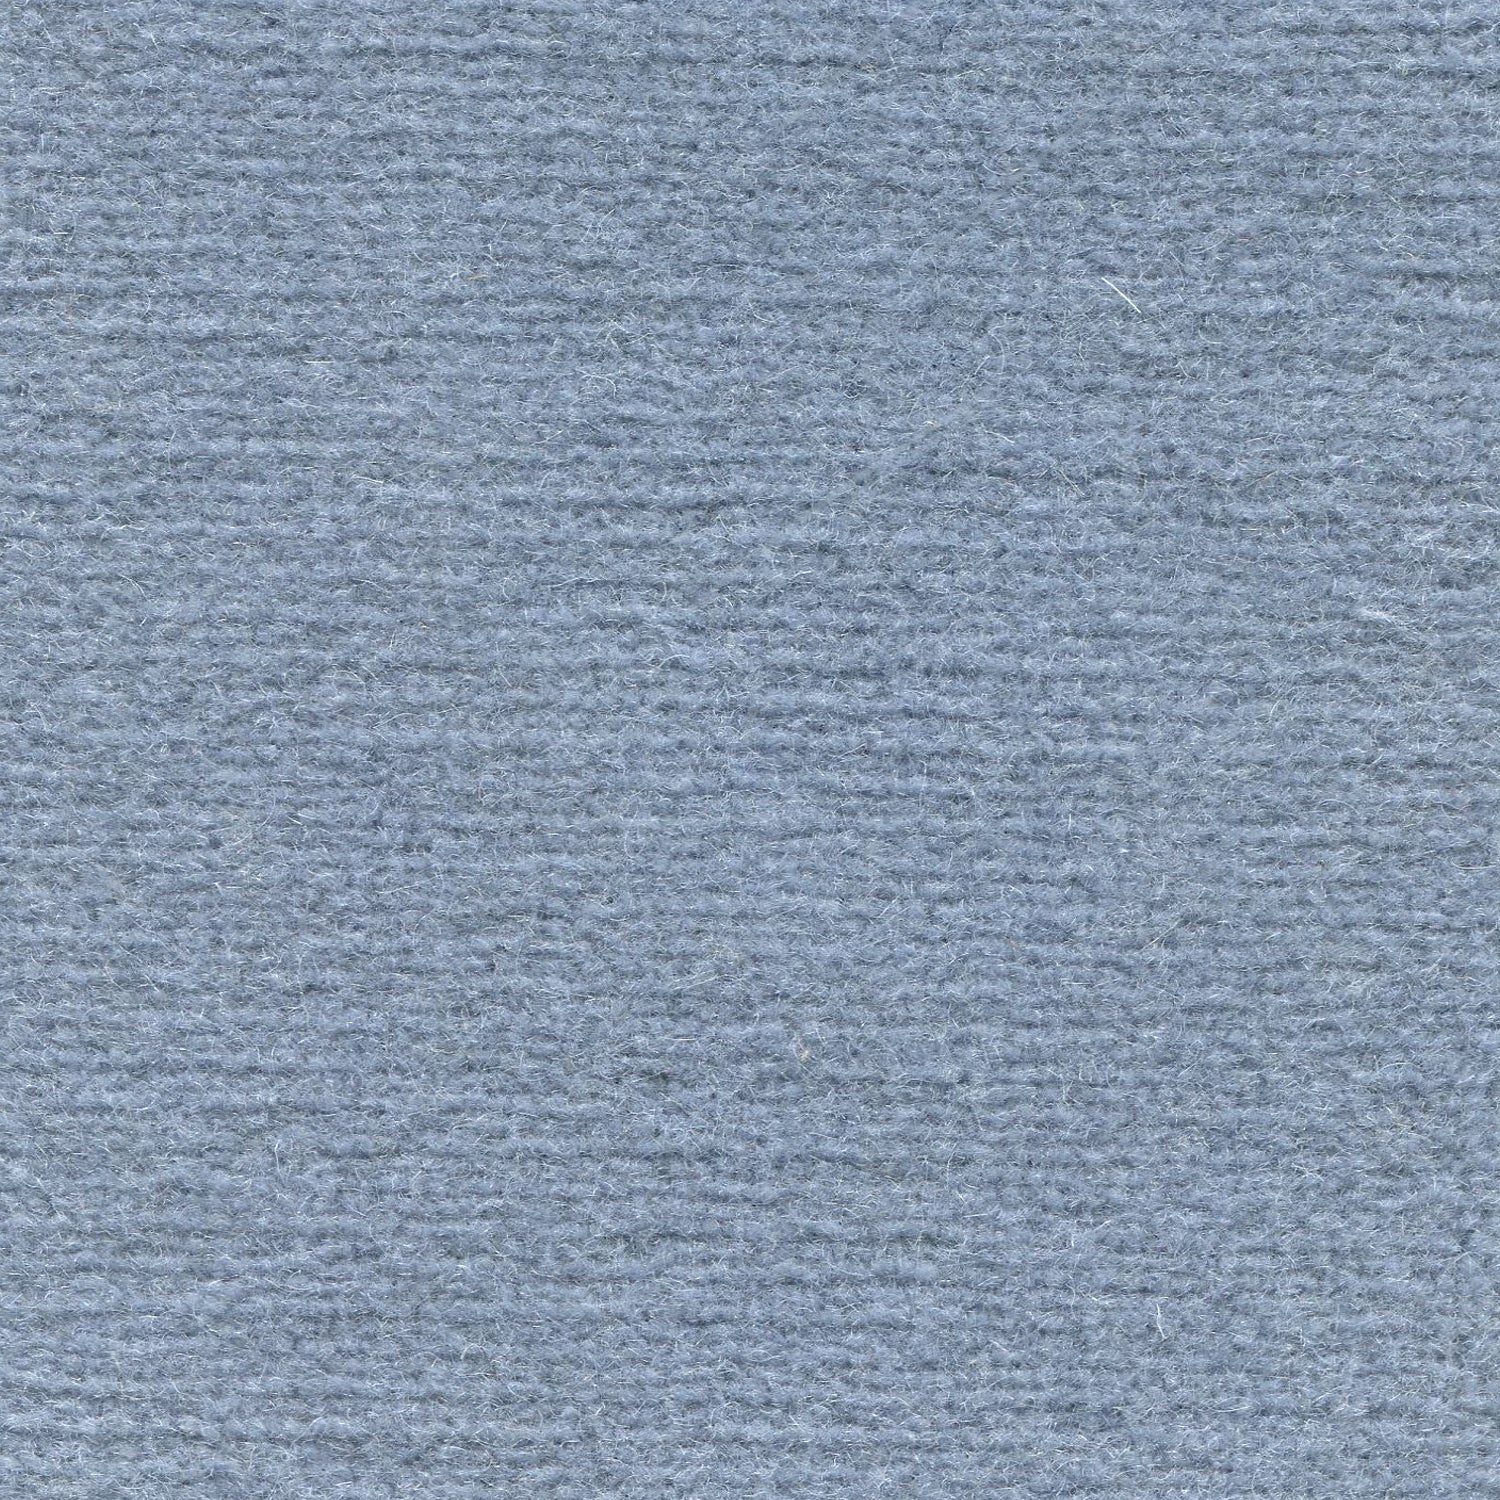 Wool broadloom carpet swatch in a high-pile weave in a solid sky-blue colorway.